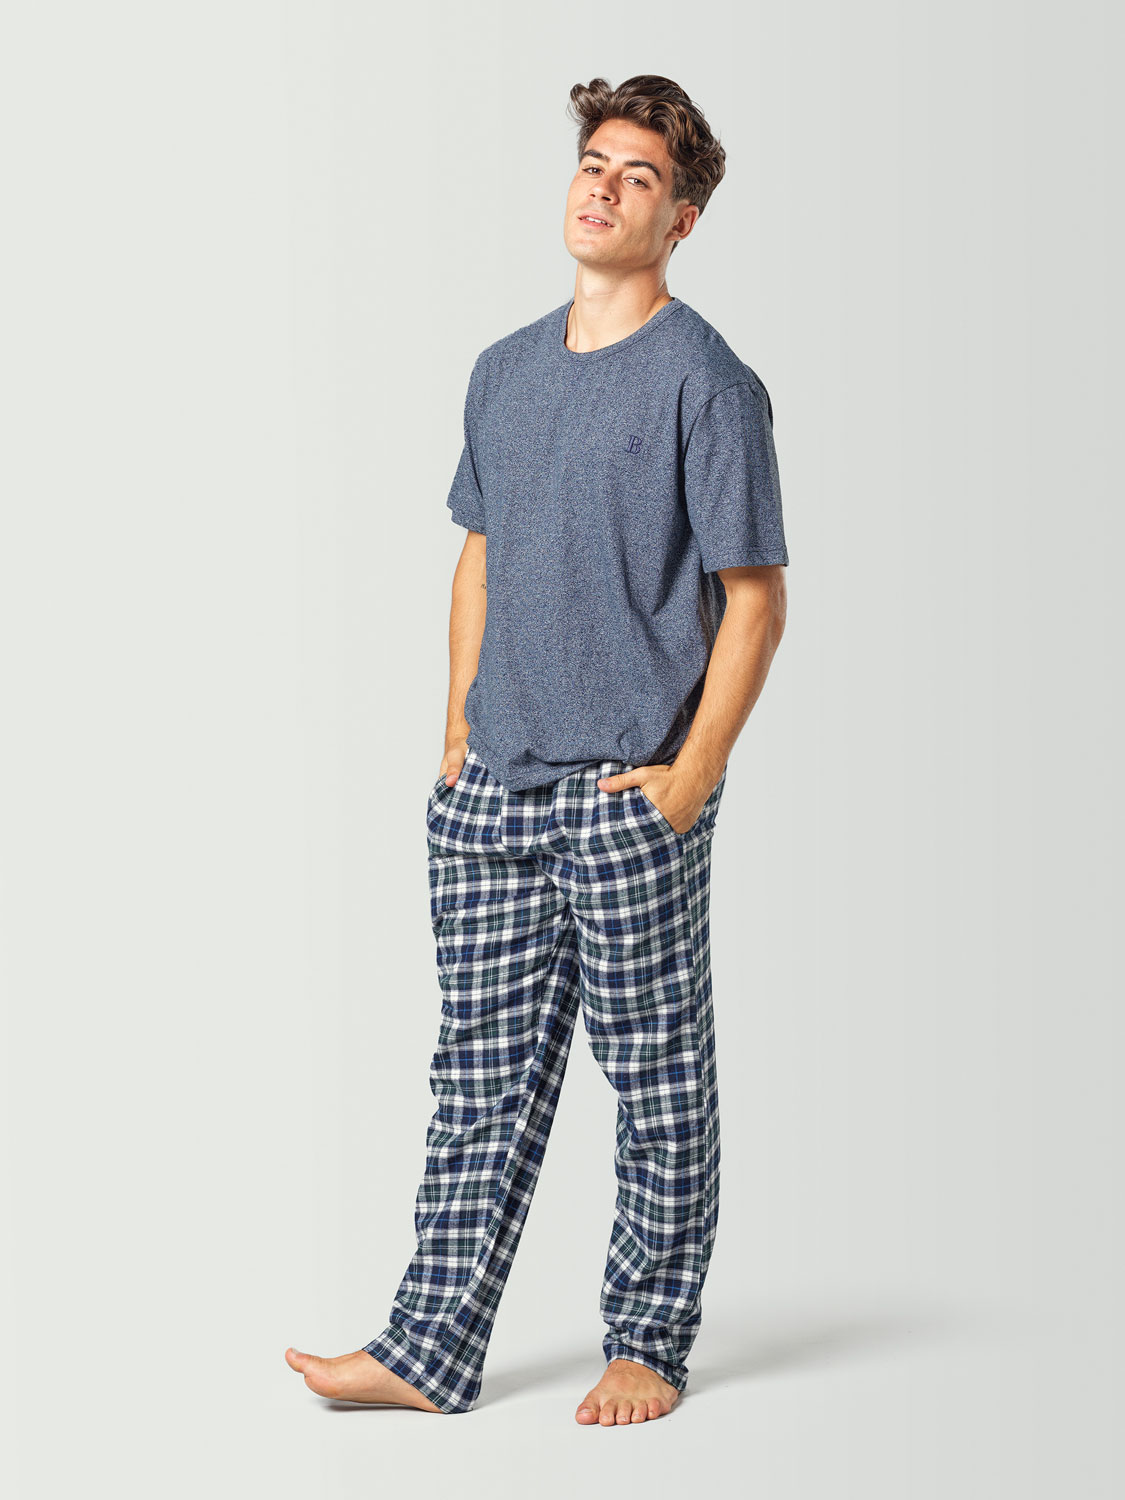 Camiseta de pijama manga corta para | Pijamas Babelo